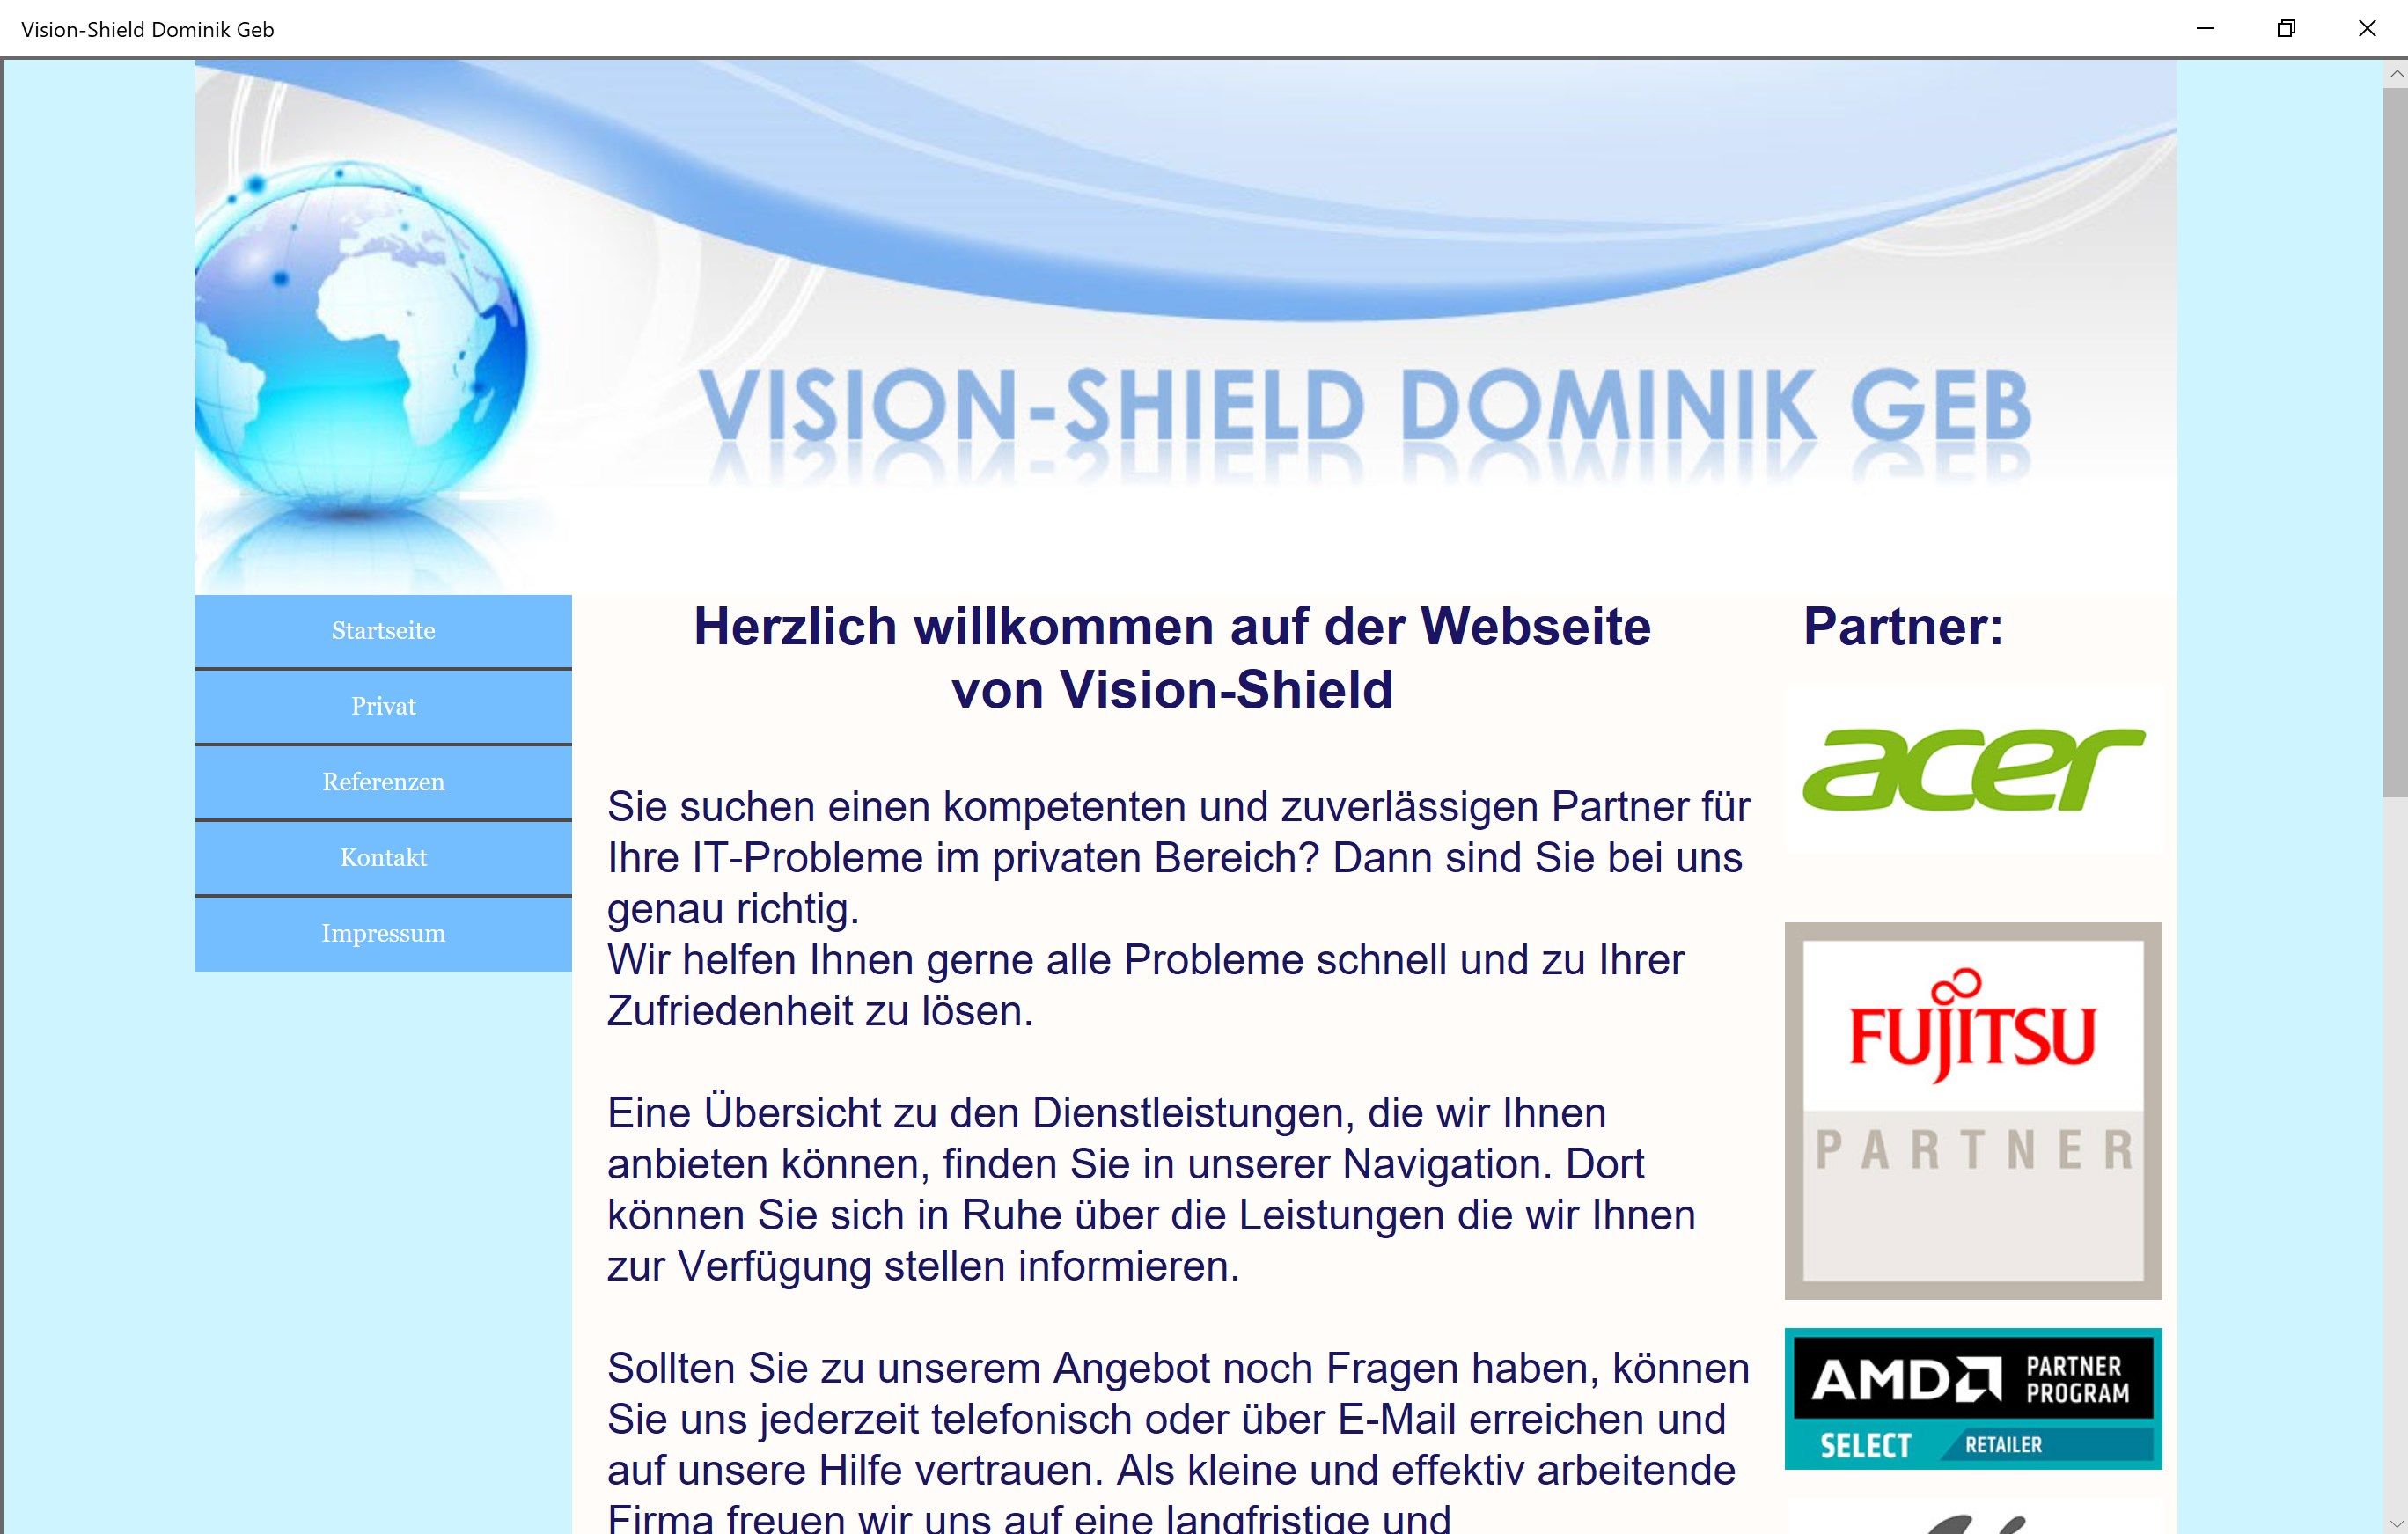 Vision-Shield Dominik Geb